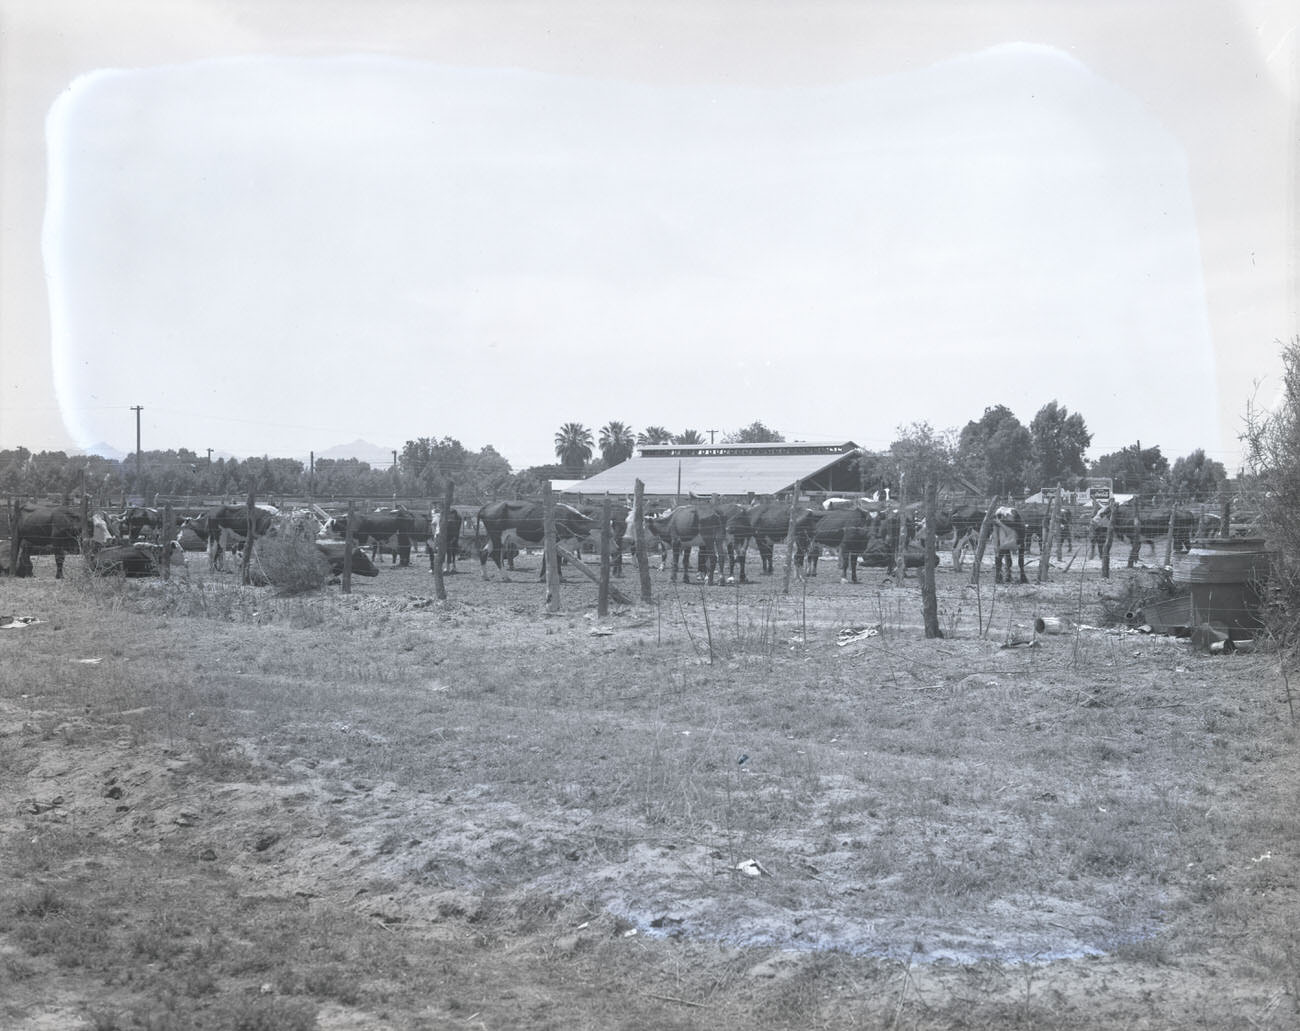 Cattle in Stockyard, 1942